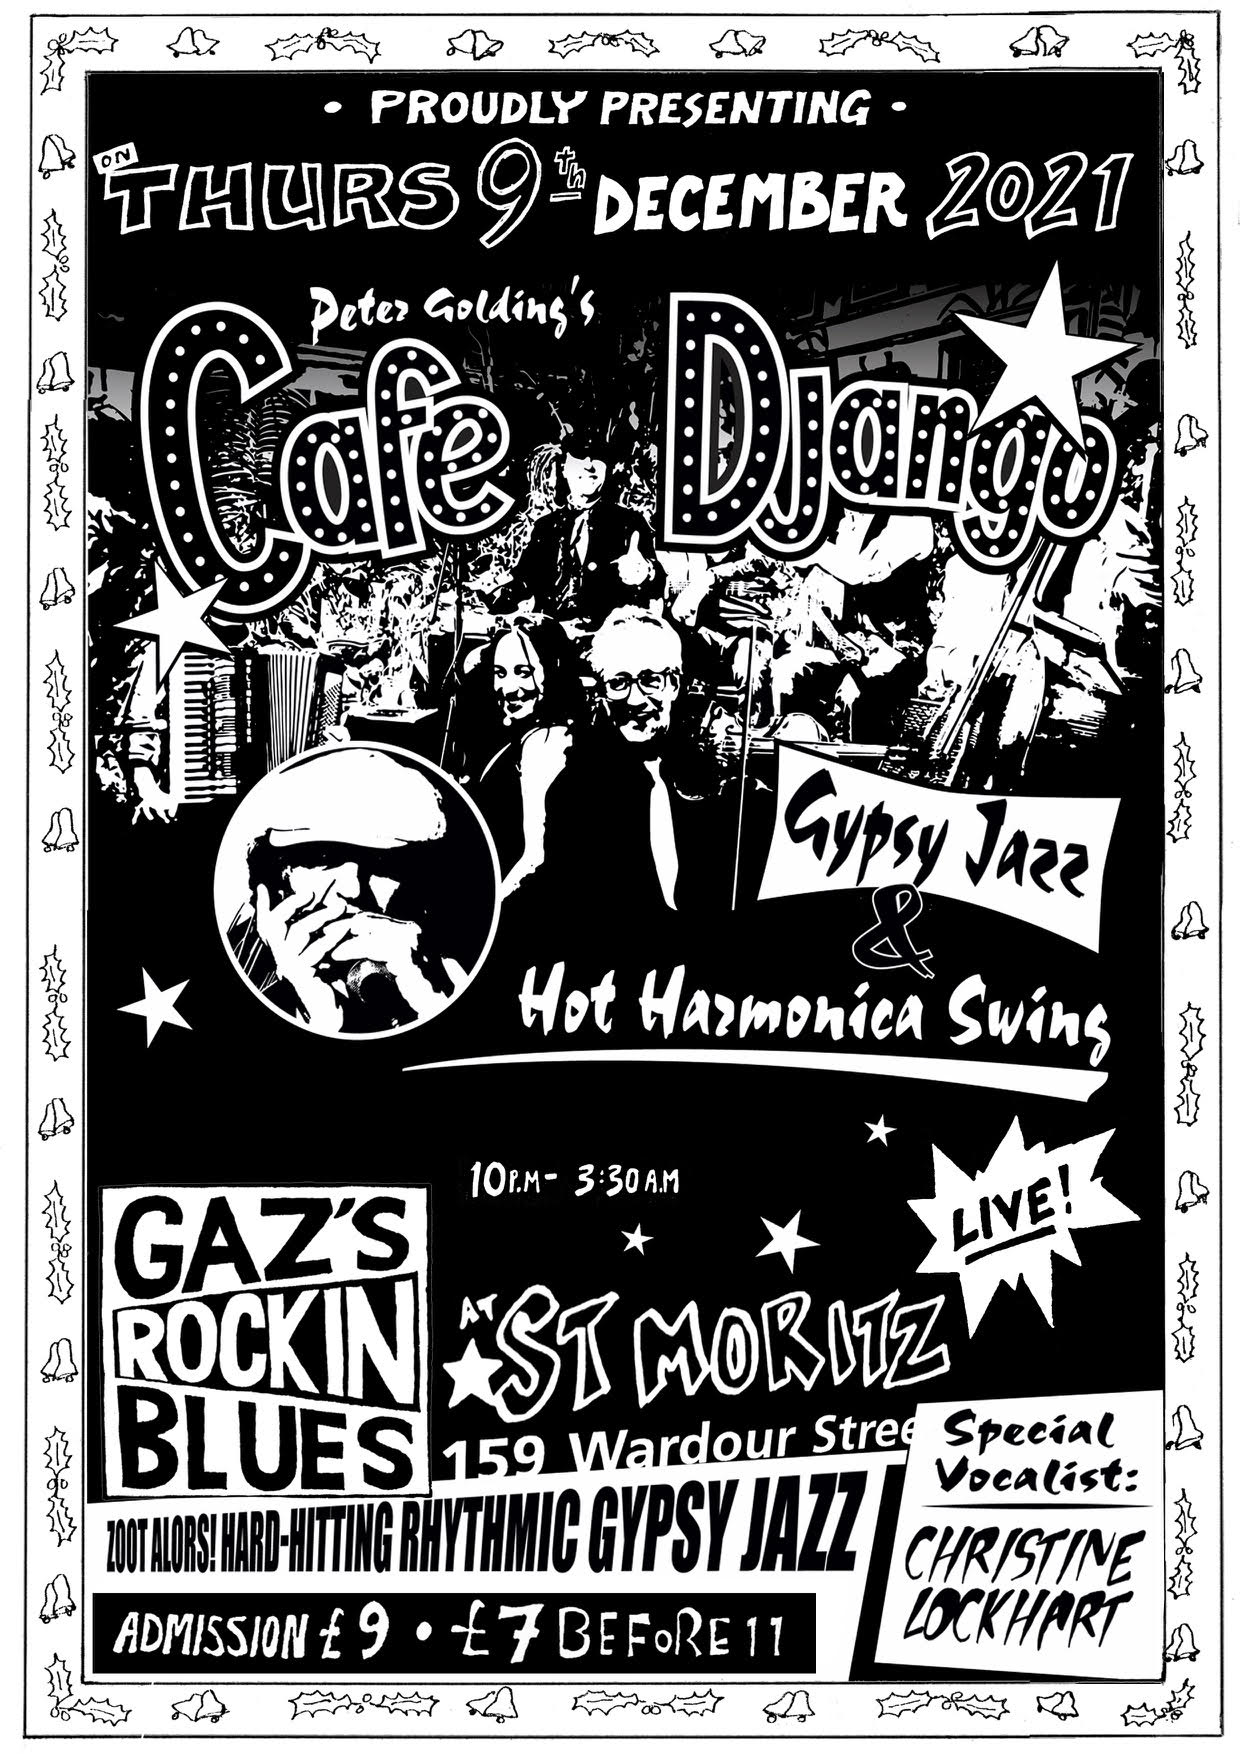 gazs rocking blues poster